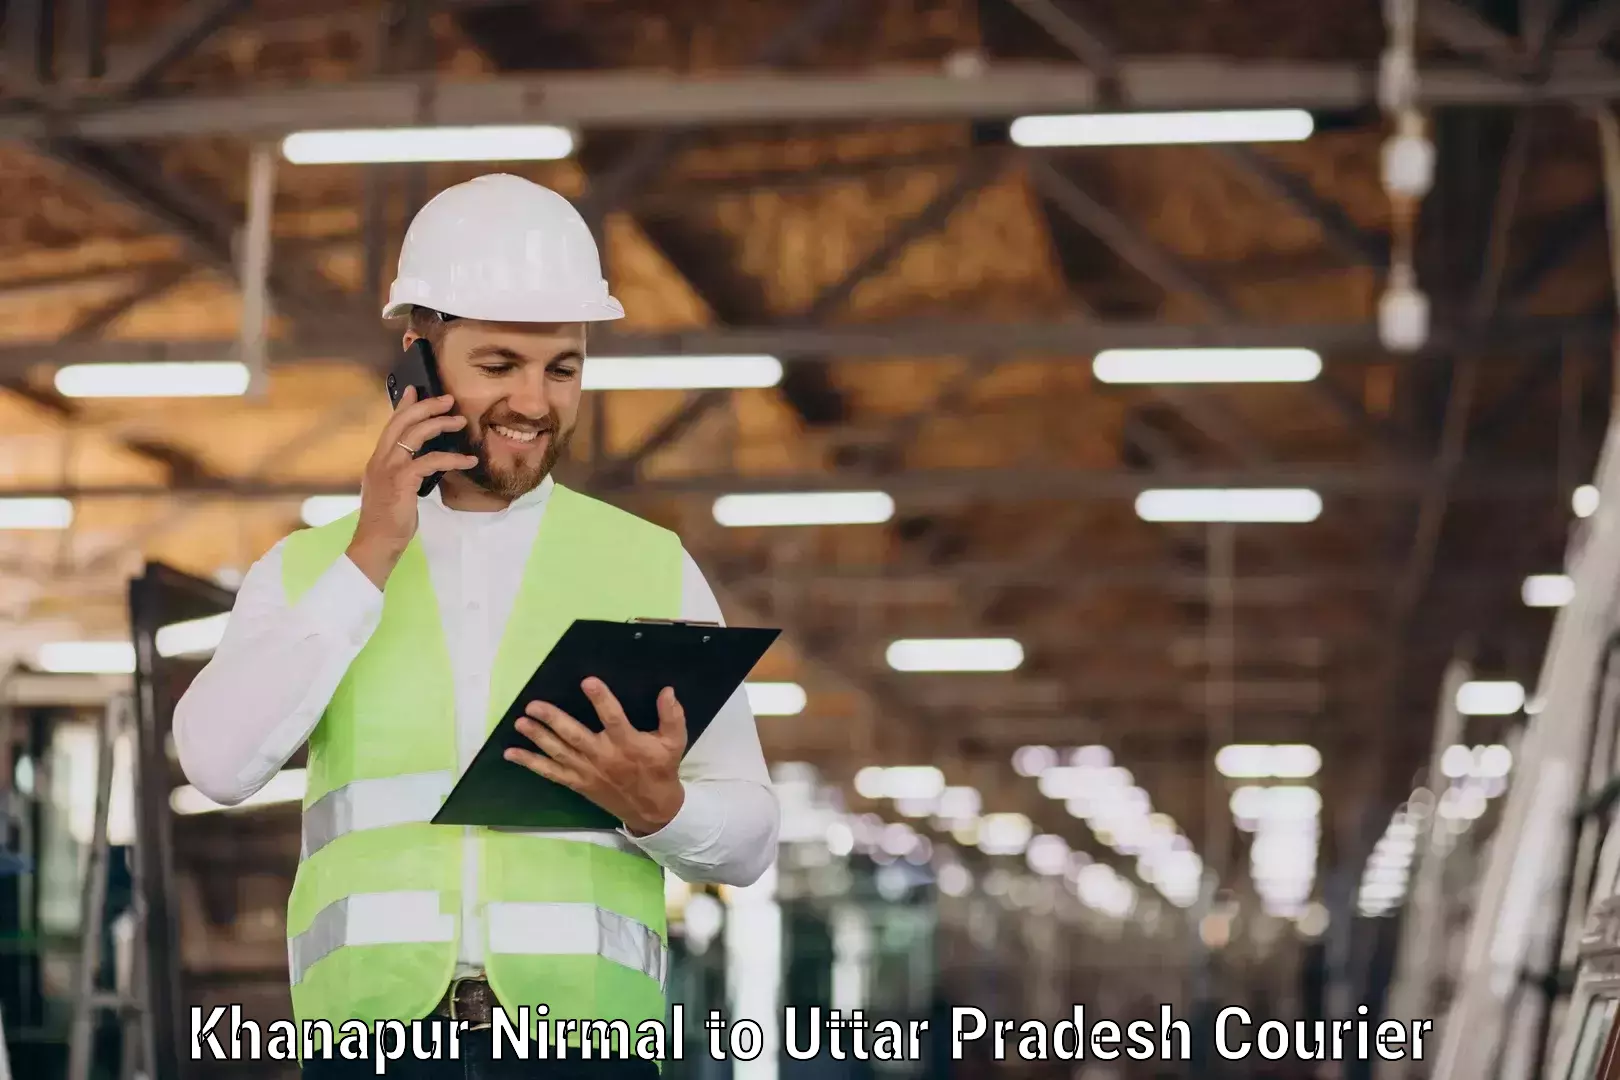 Nationwide delivery network Khanapur Nirmal to Aligarh Muslim University